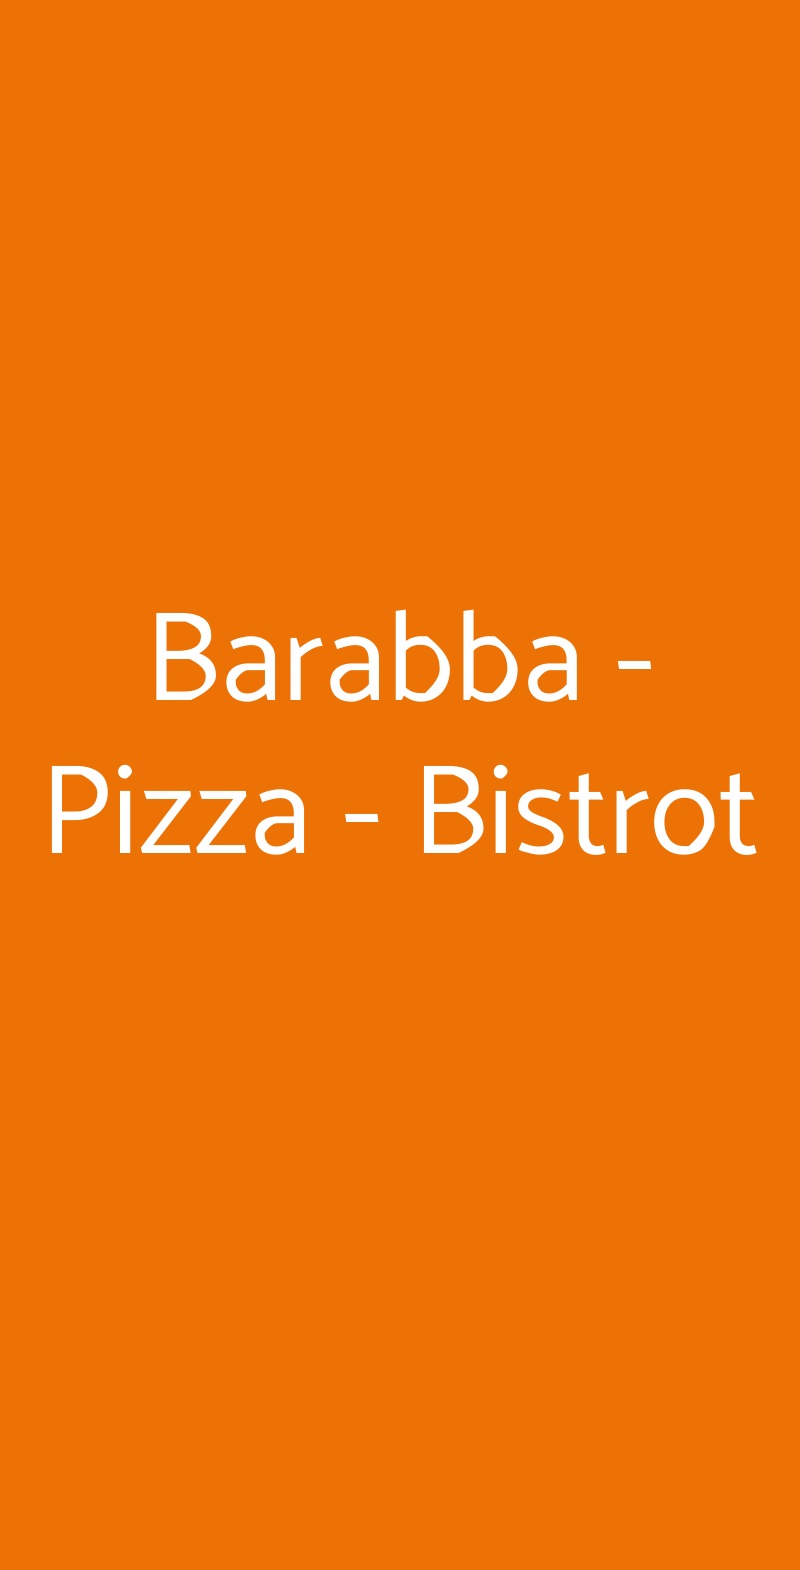 Barabba - Pizza - Bistrot Milano menù 1 pagina